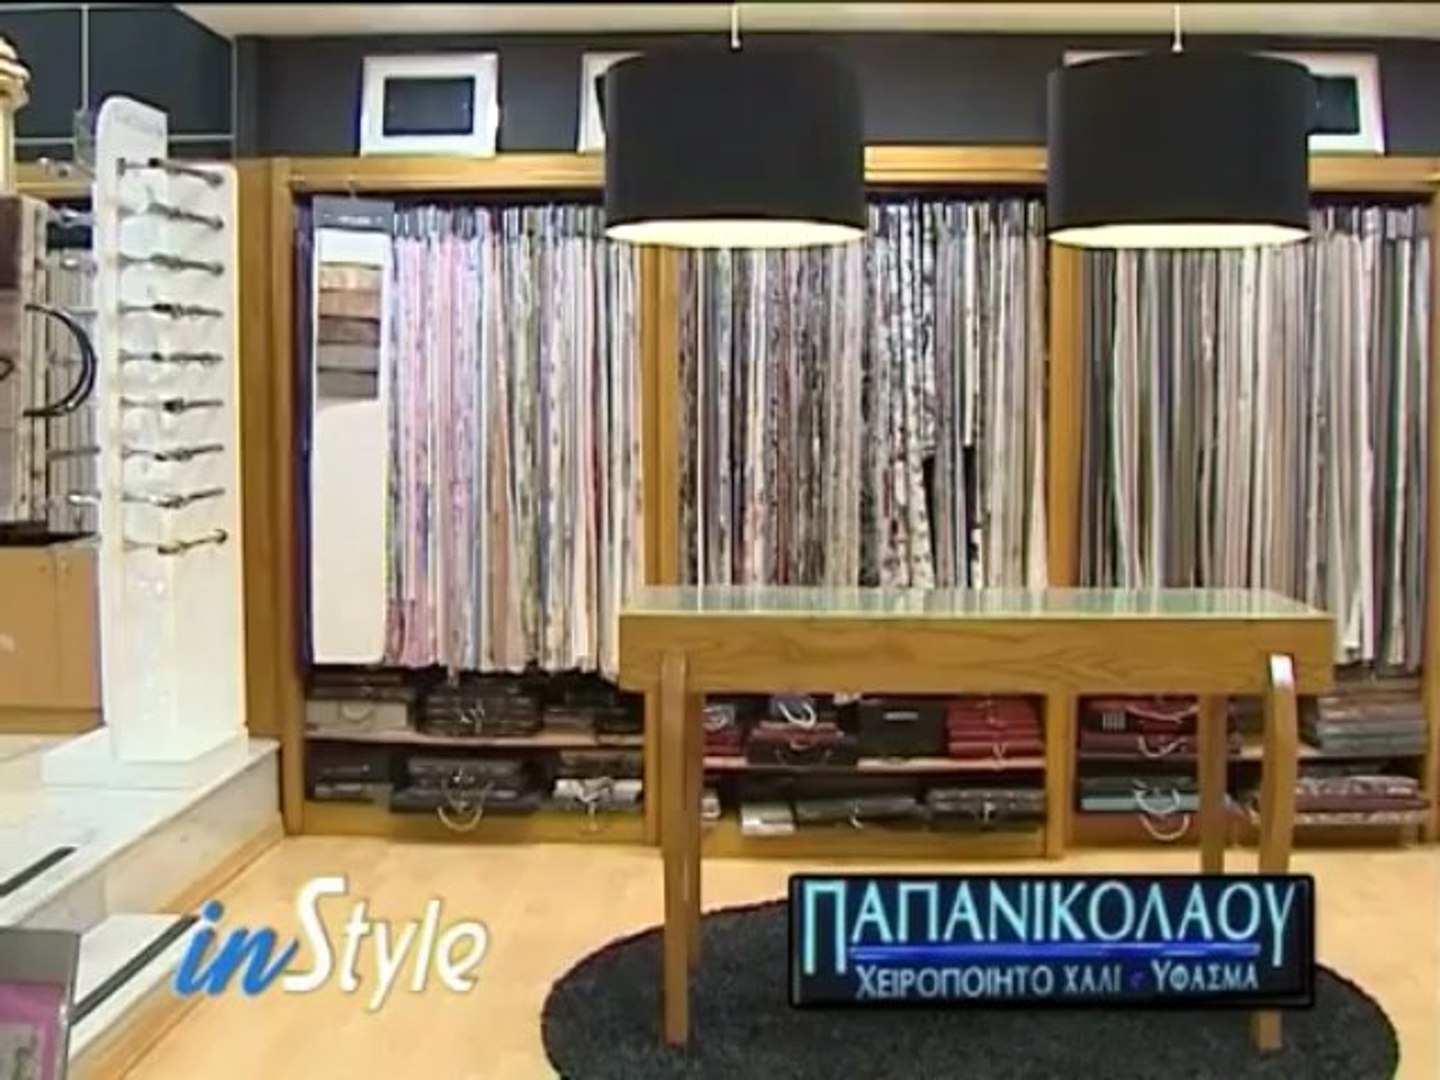 In style: Hondos, Marasil, Παπανικολάου - video Dailymotion